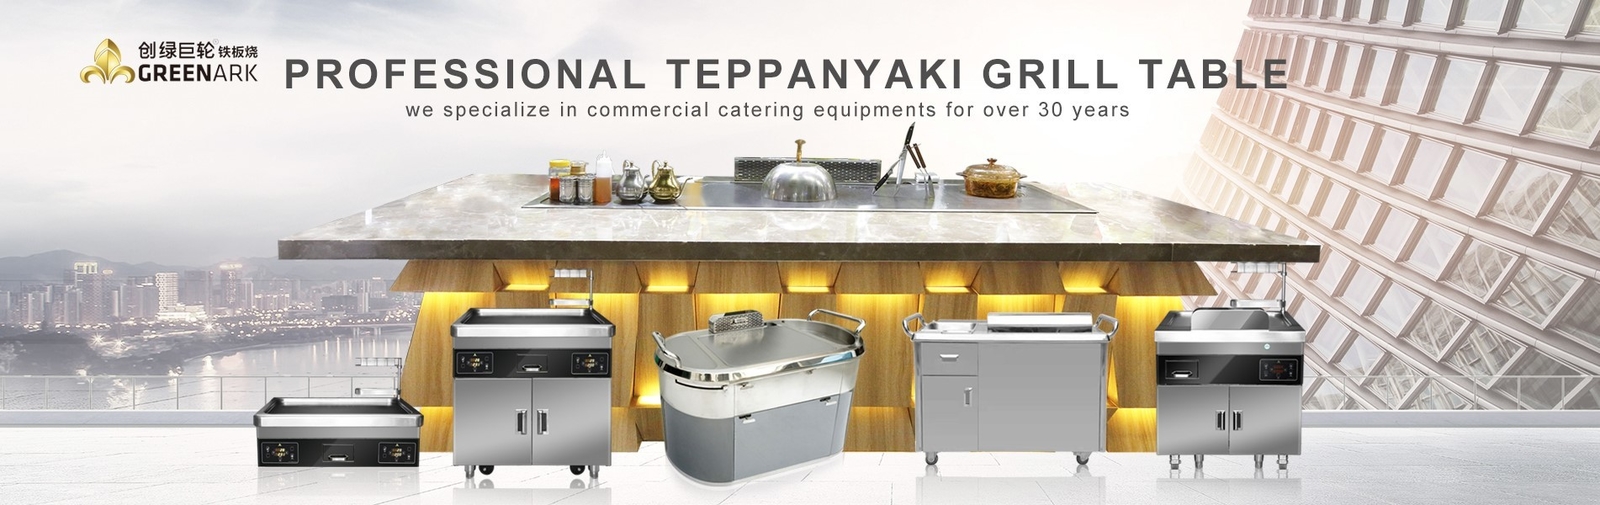 Teppanyaki-Grill-Tabelle